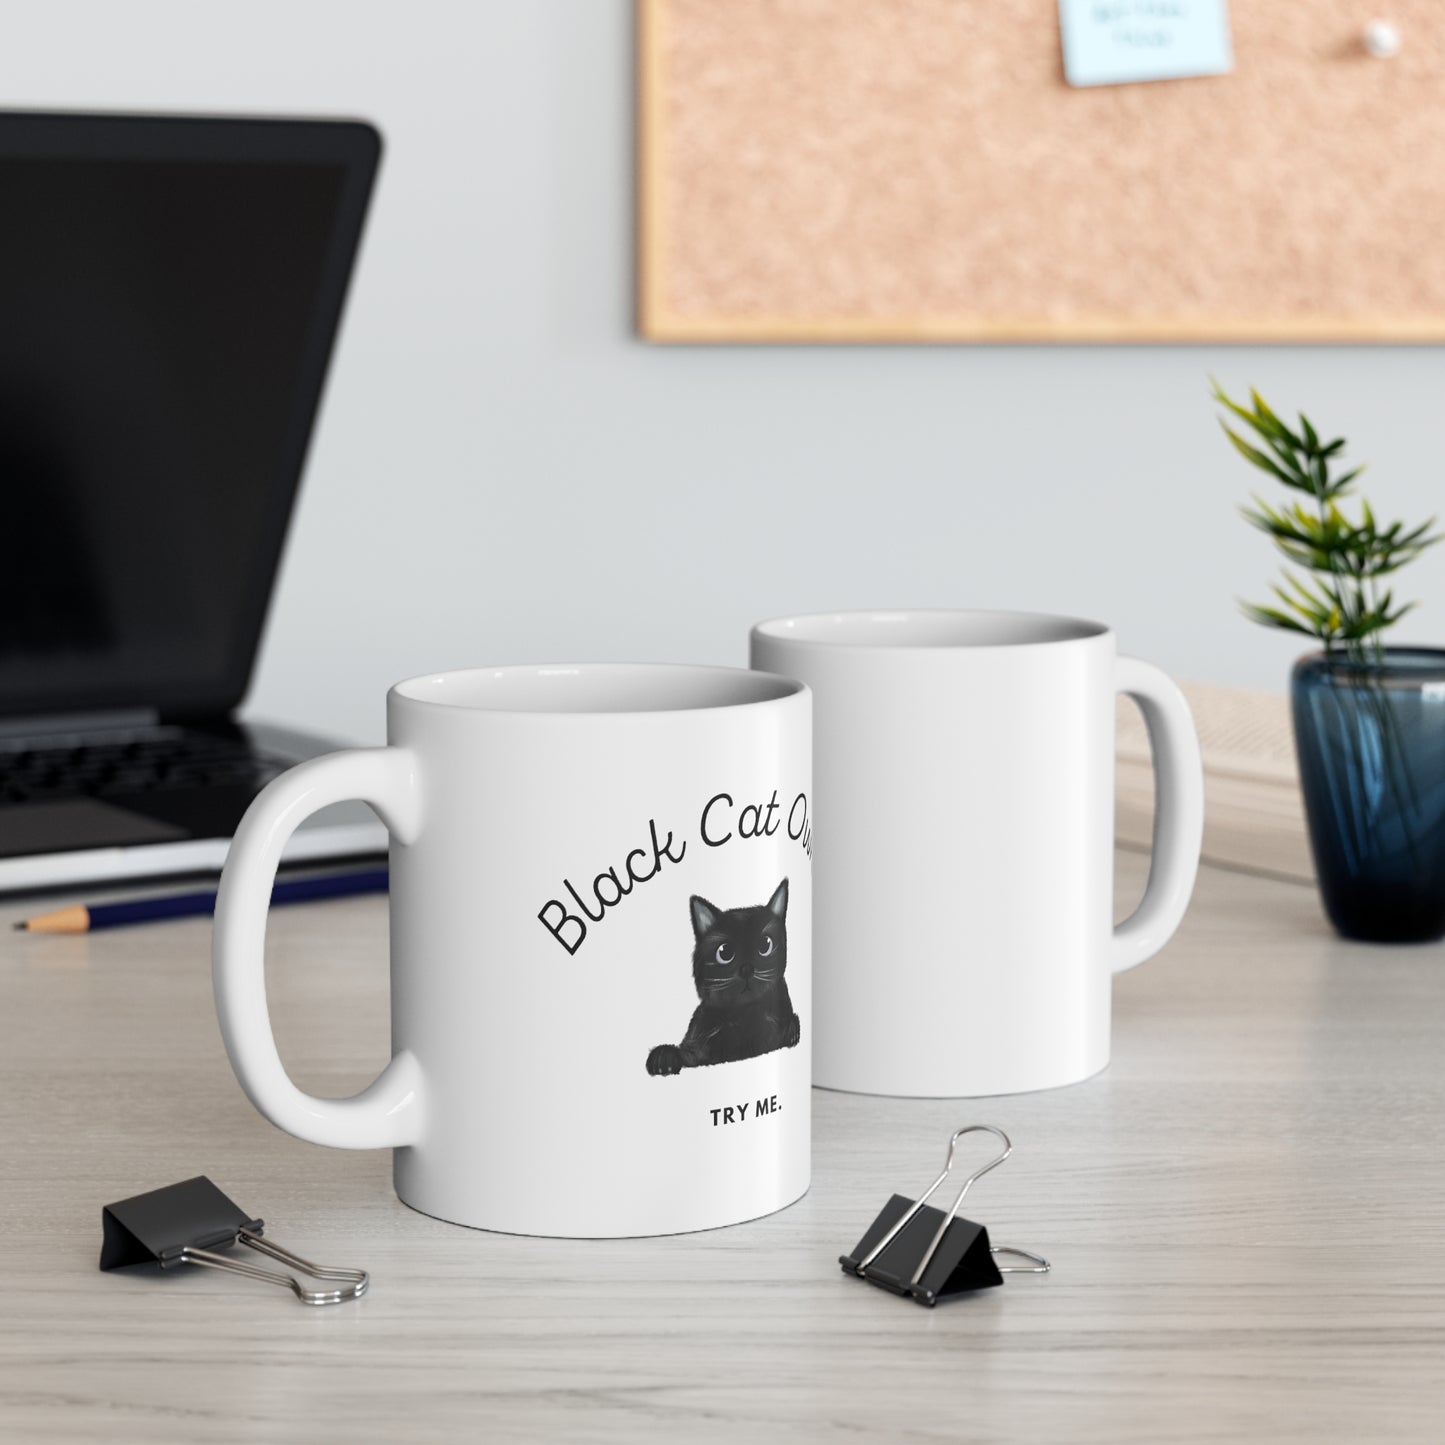 Black Cat Owner. Try Me Ceramic Mug 11oz